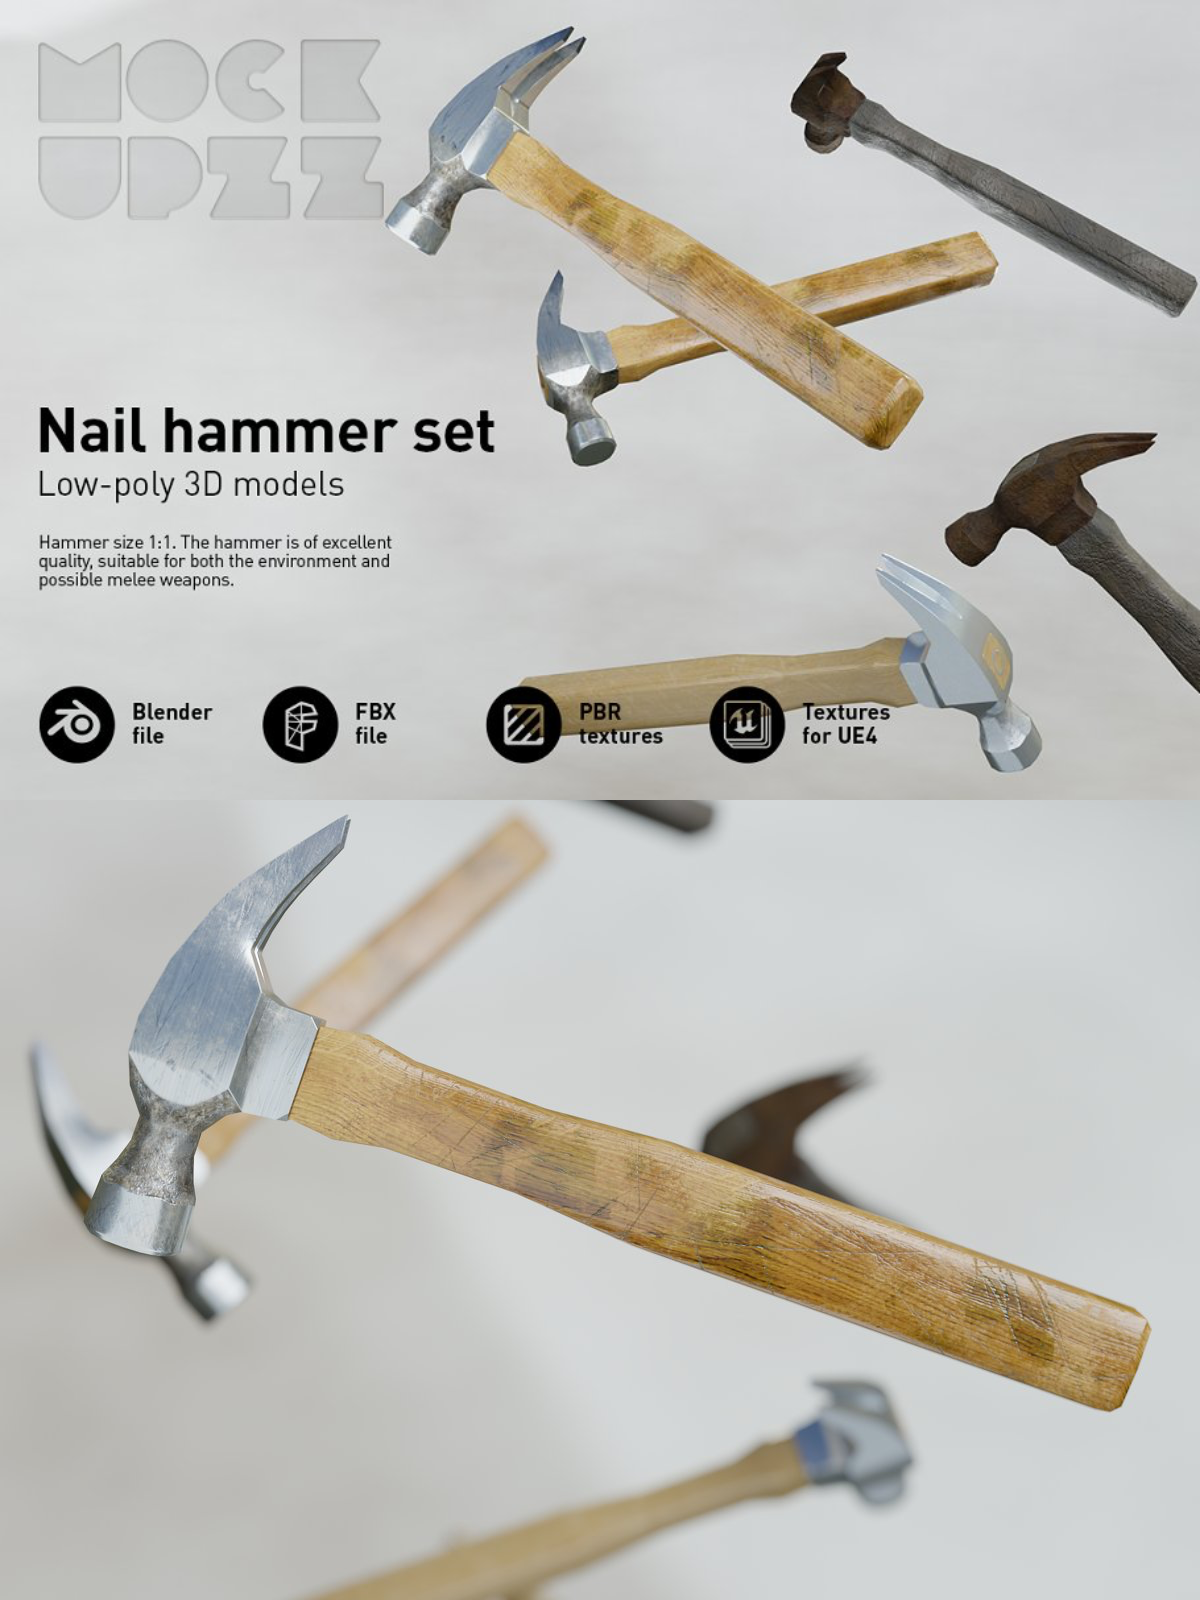 Nail hammer set pinterest image preview.